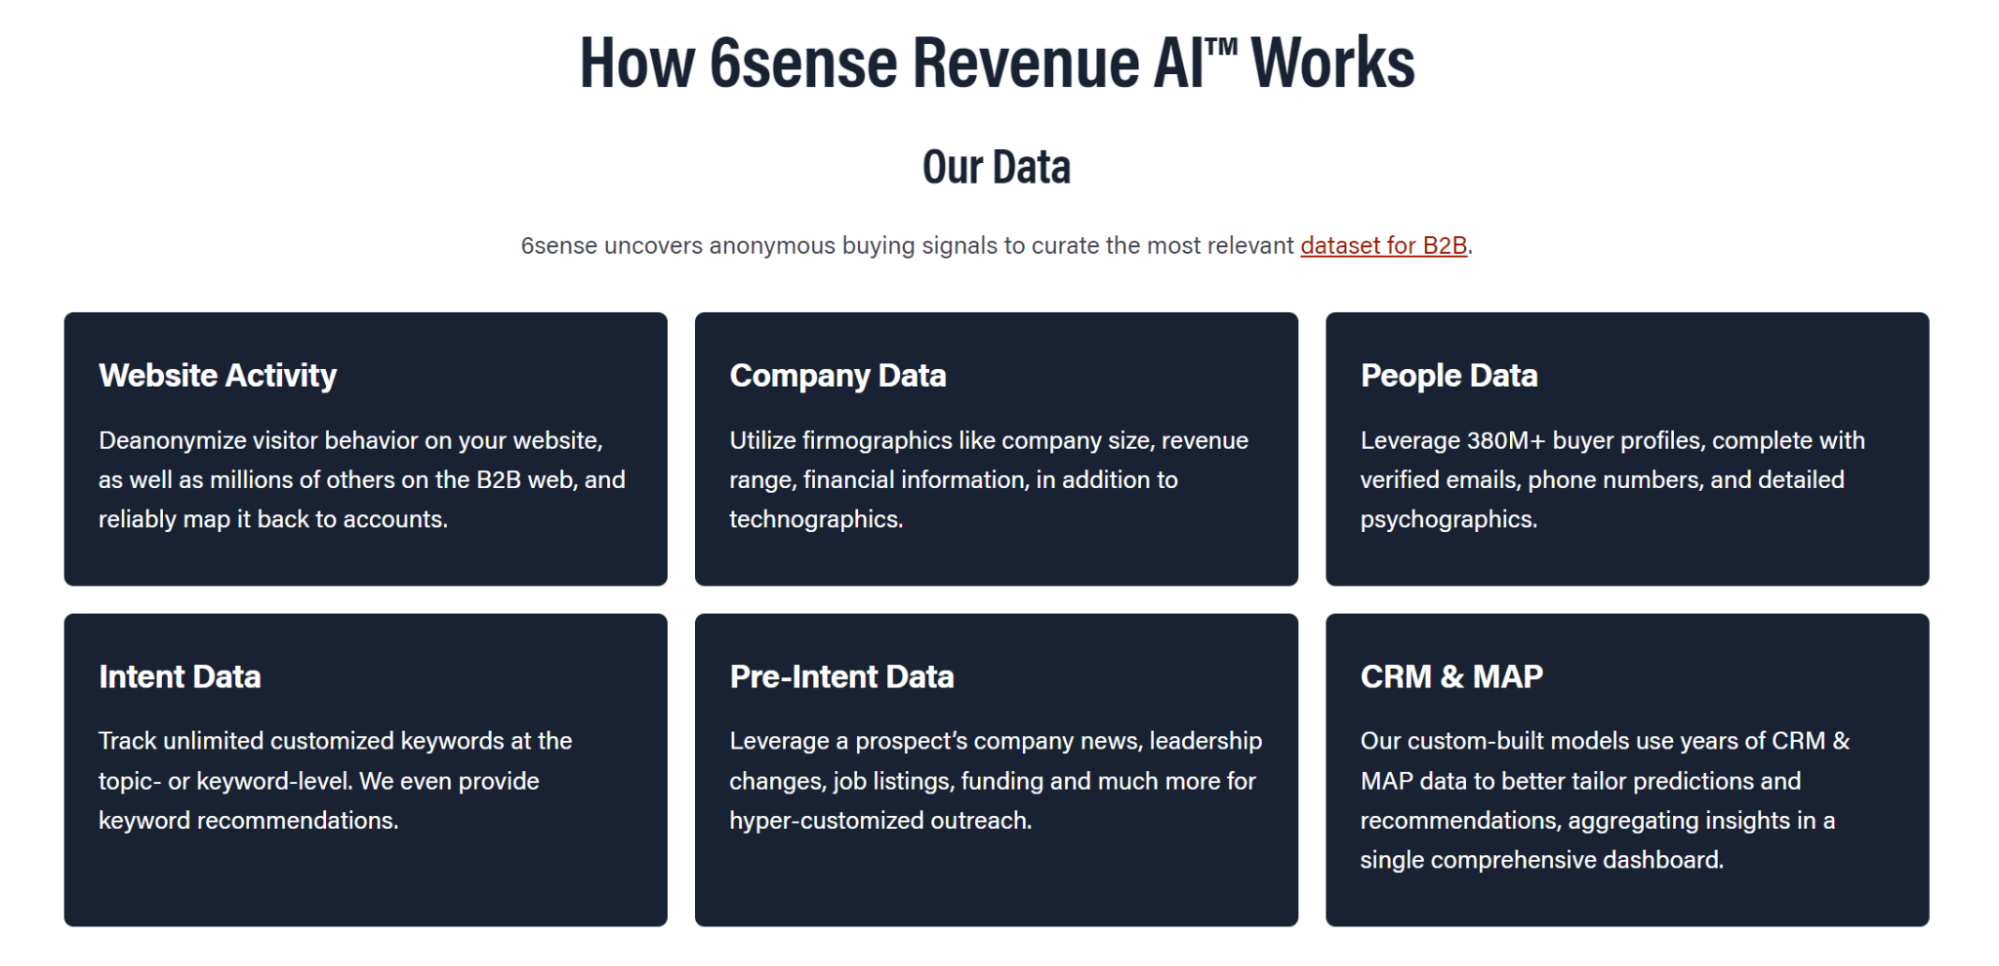 6Sense product page explaining how its Revenue AI platform uncovers anonymous buyer signals.